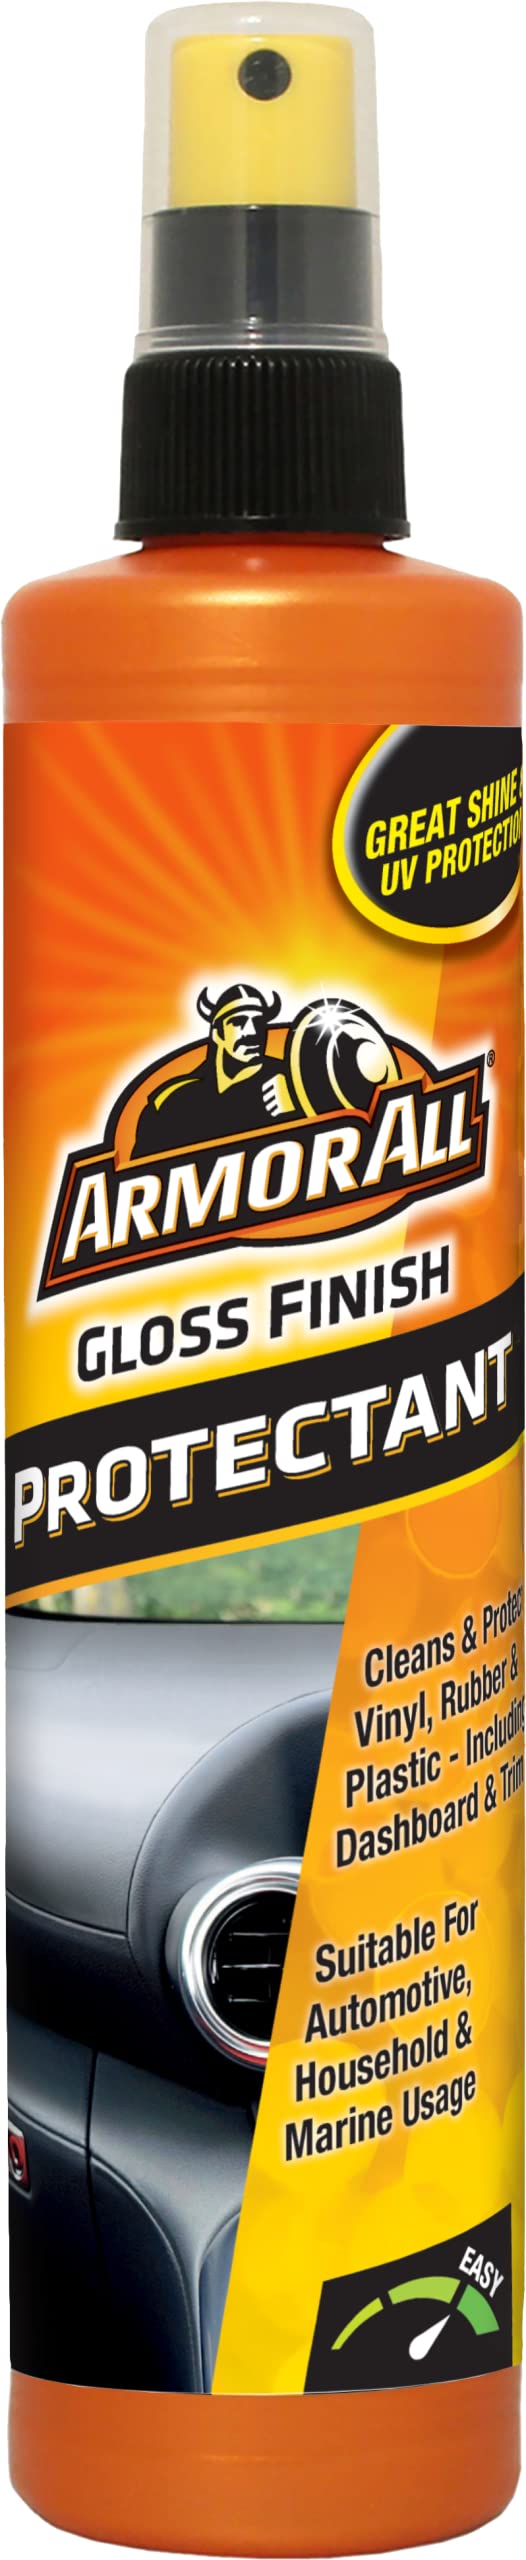 Armor All Protectant Gloss Finish - 300ml von Armor All